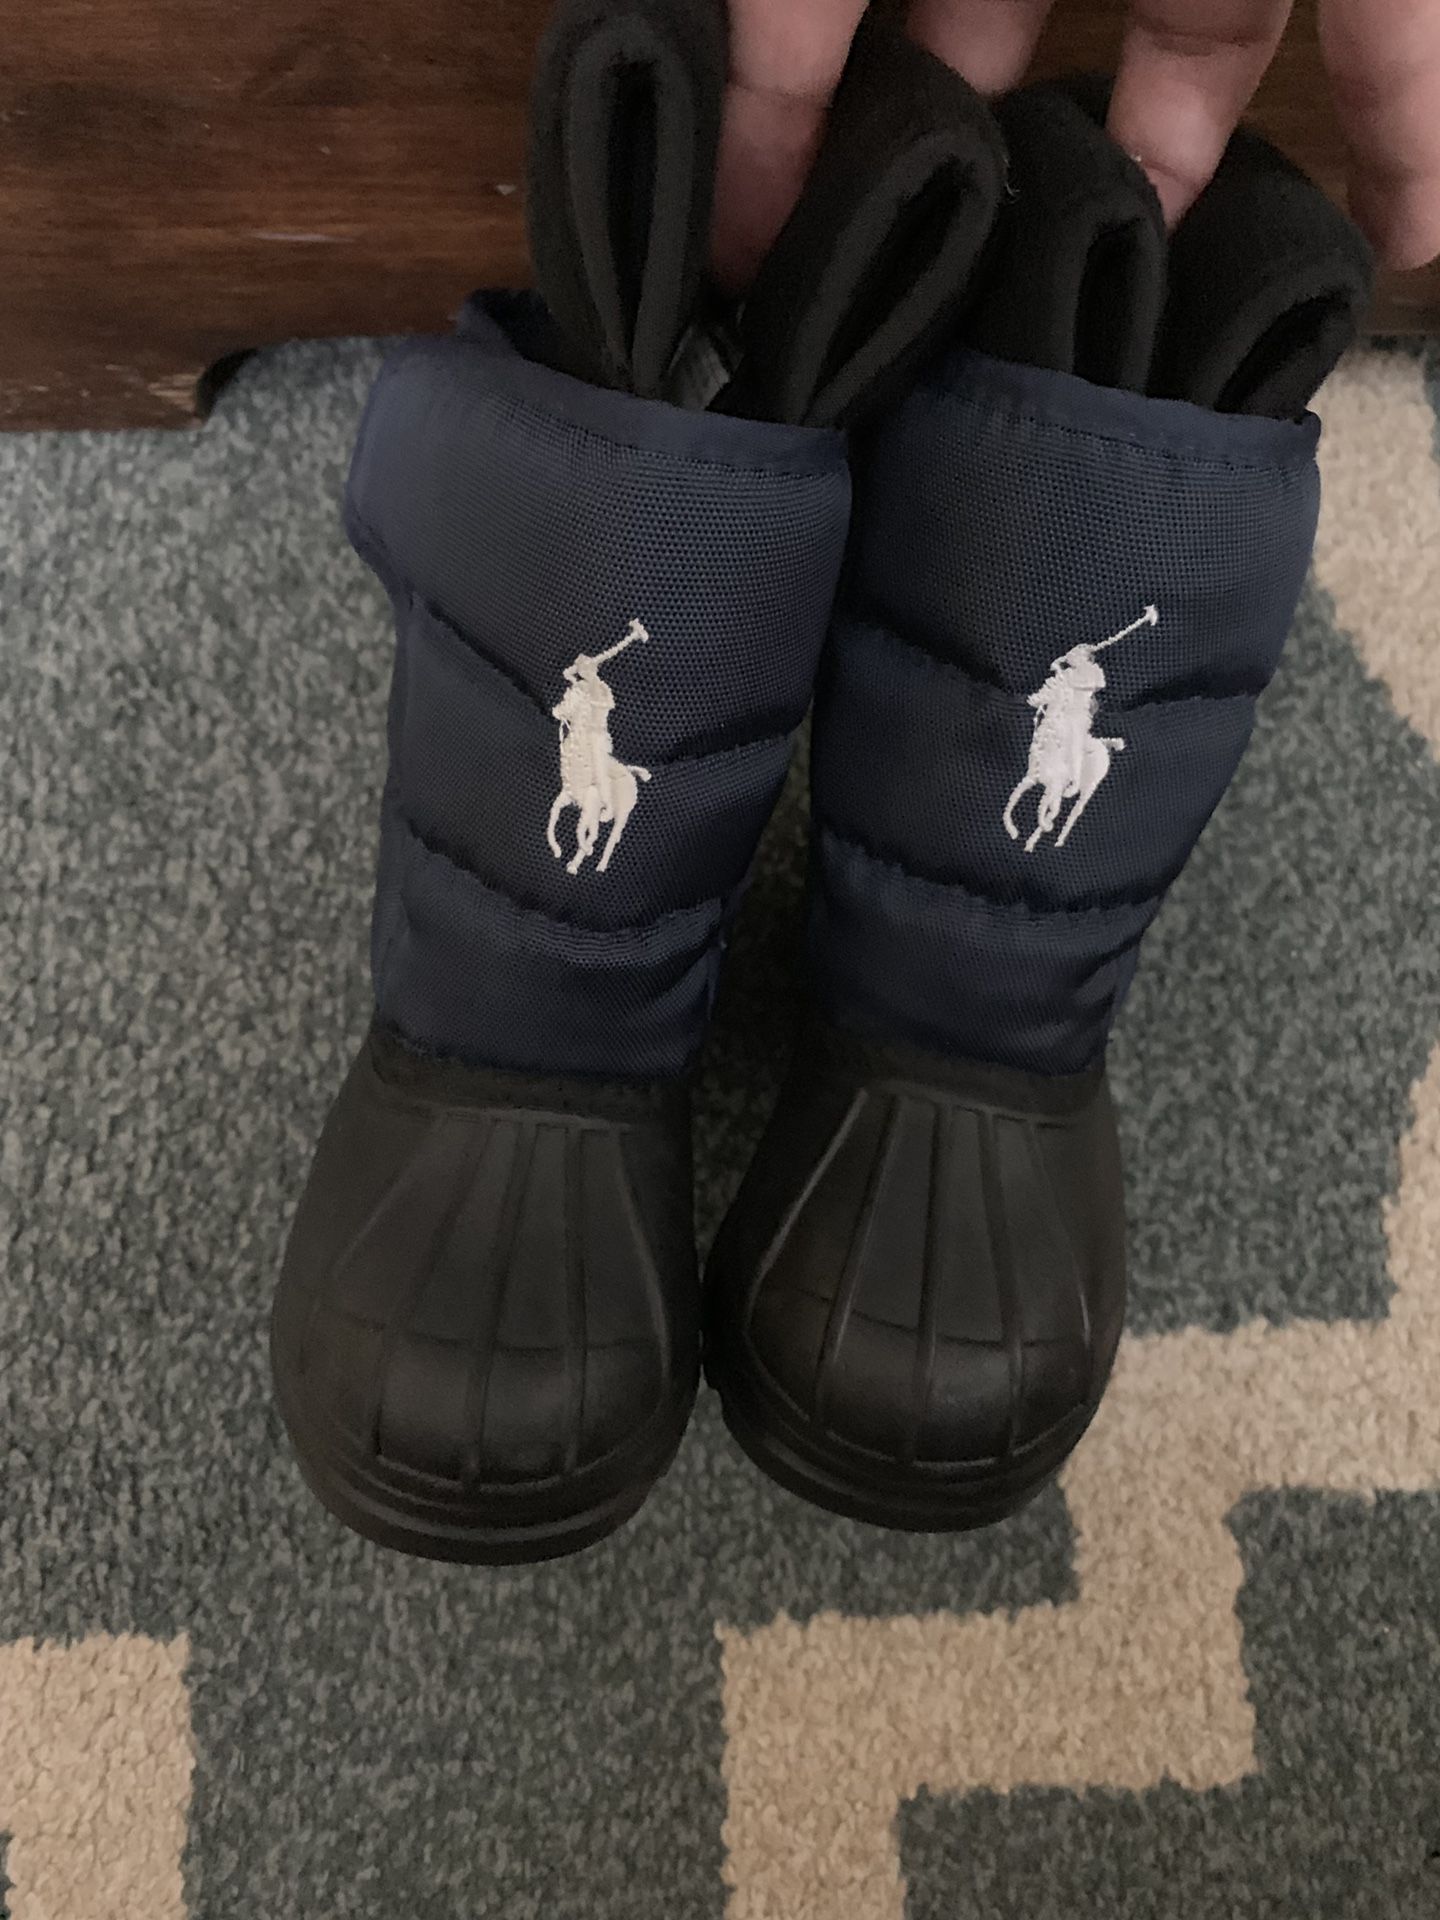 Ralph Lauren polo snow/ rain boots 4c little kids